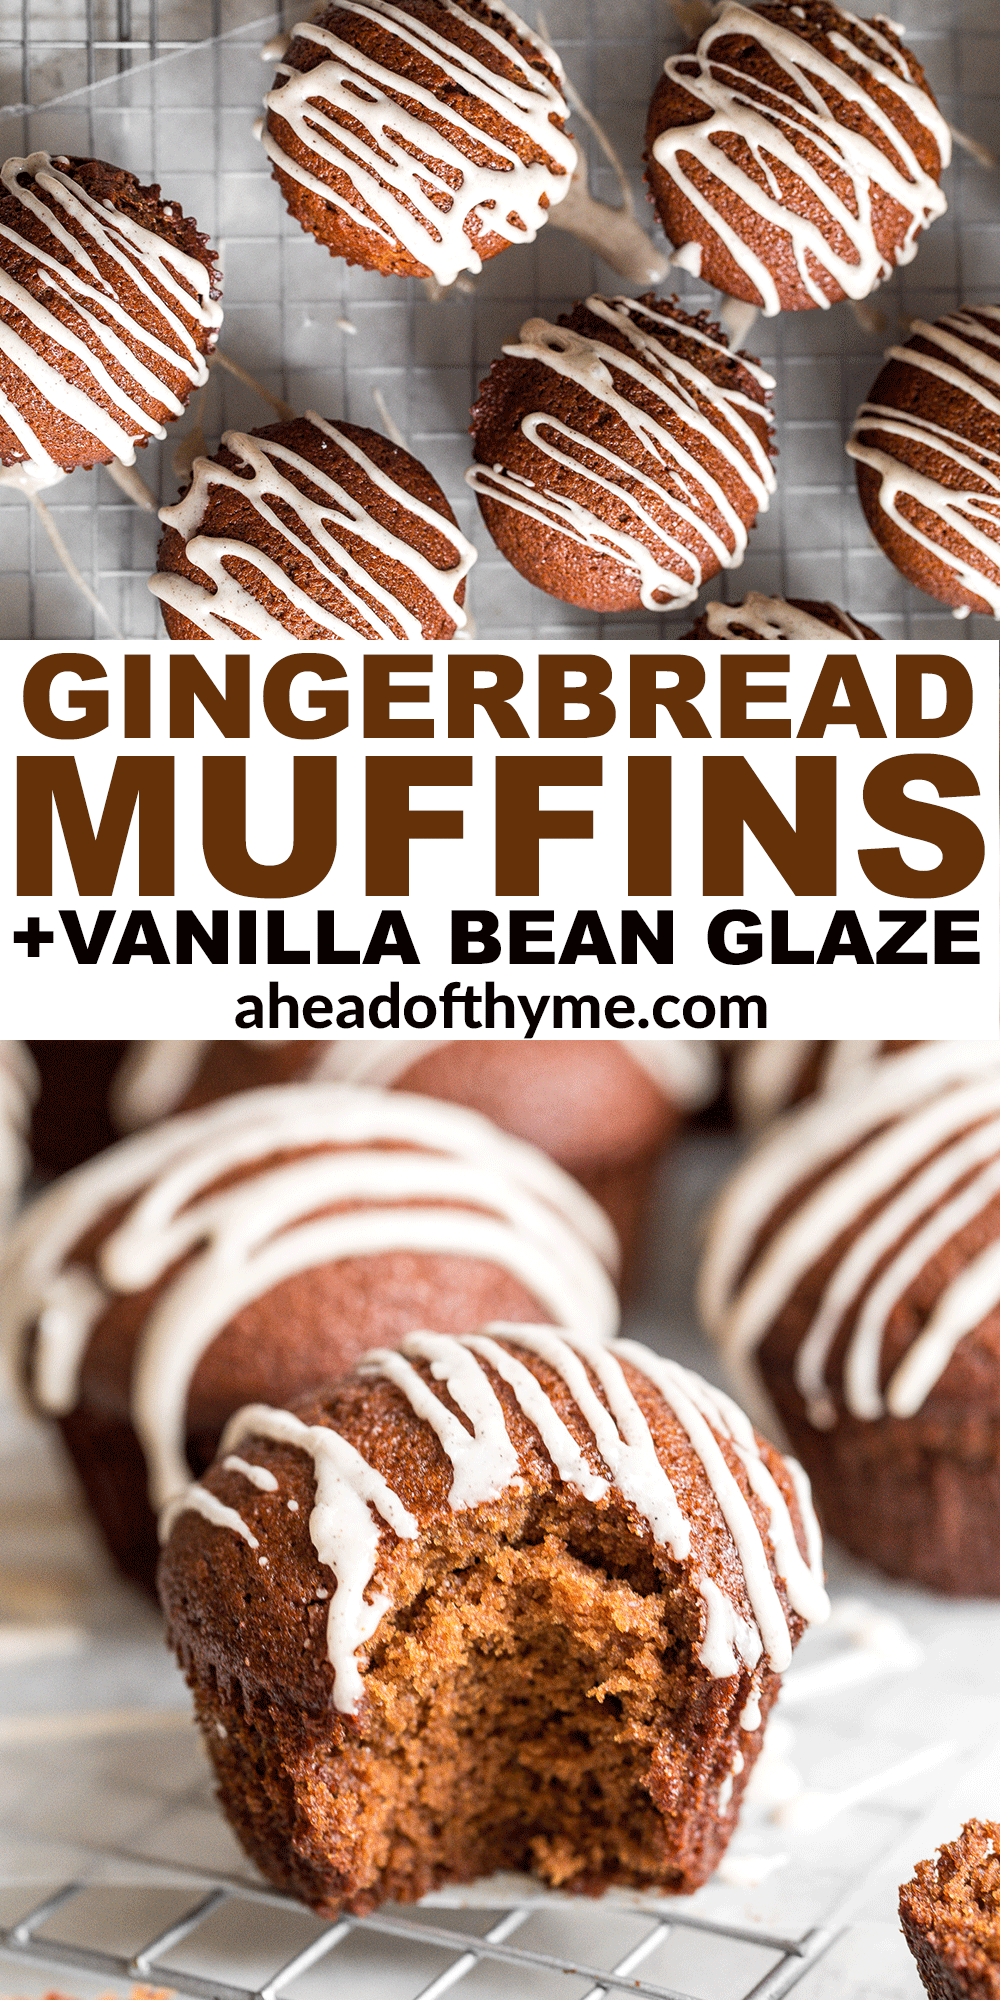 Gingerbread Muffins with Vanilla Bean Glaze